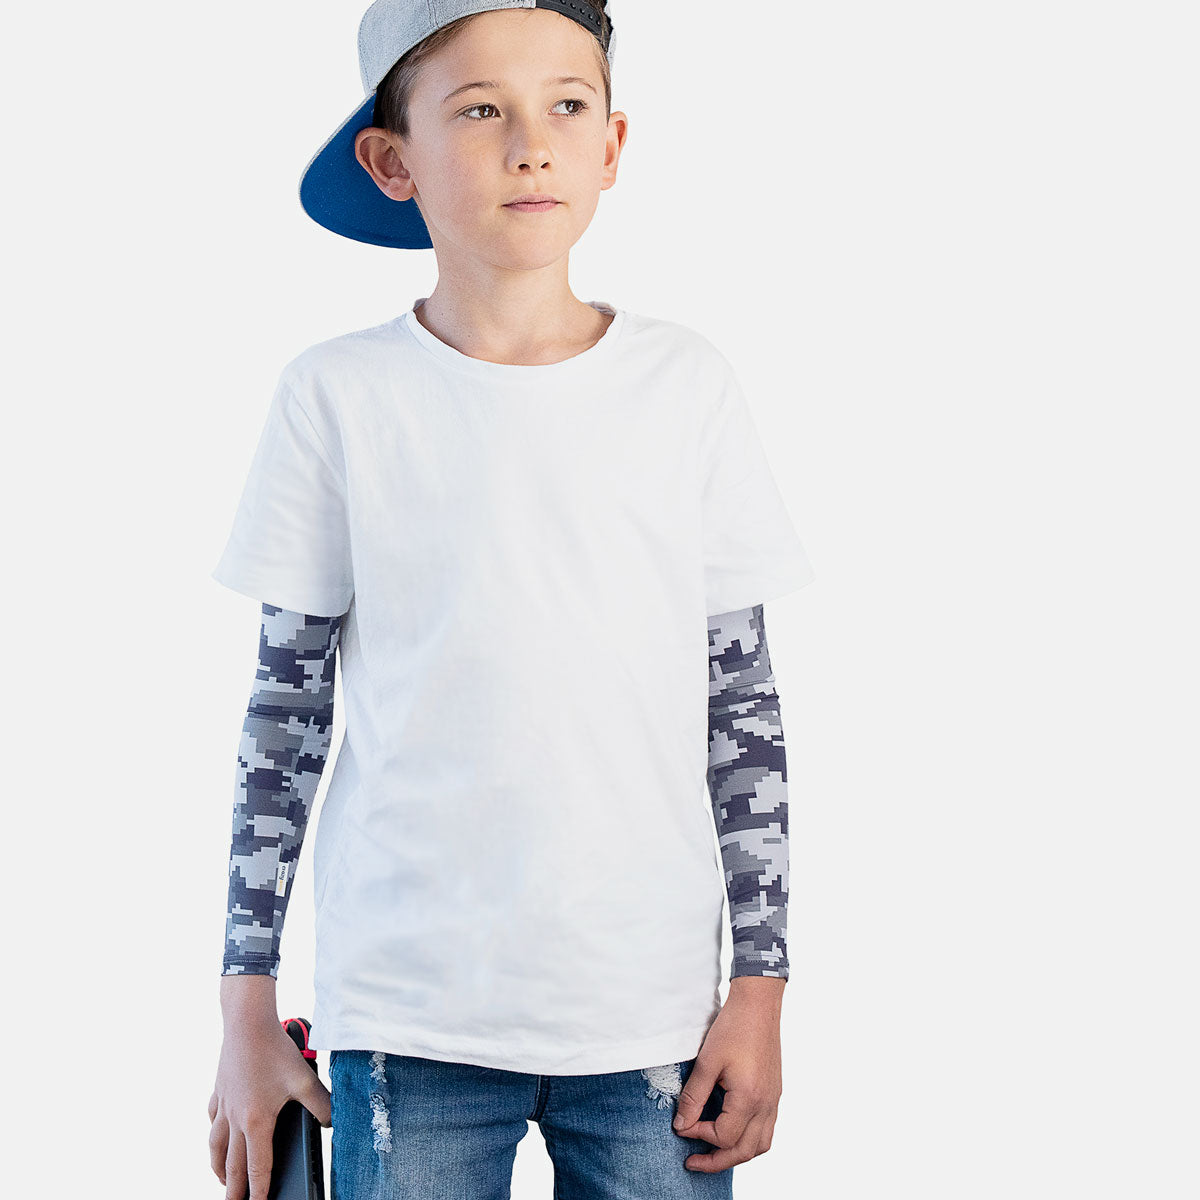 Techno Design Kids Arm Sleeves